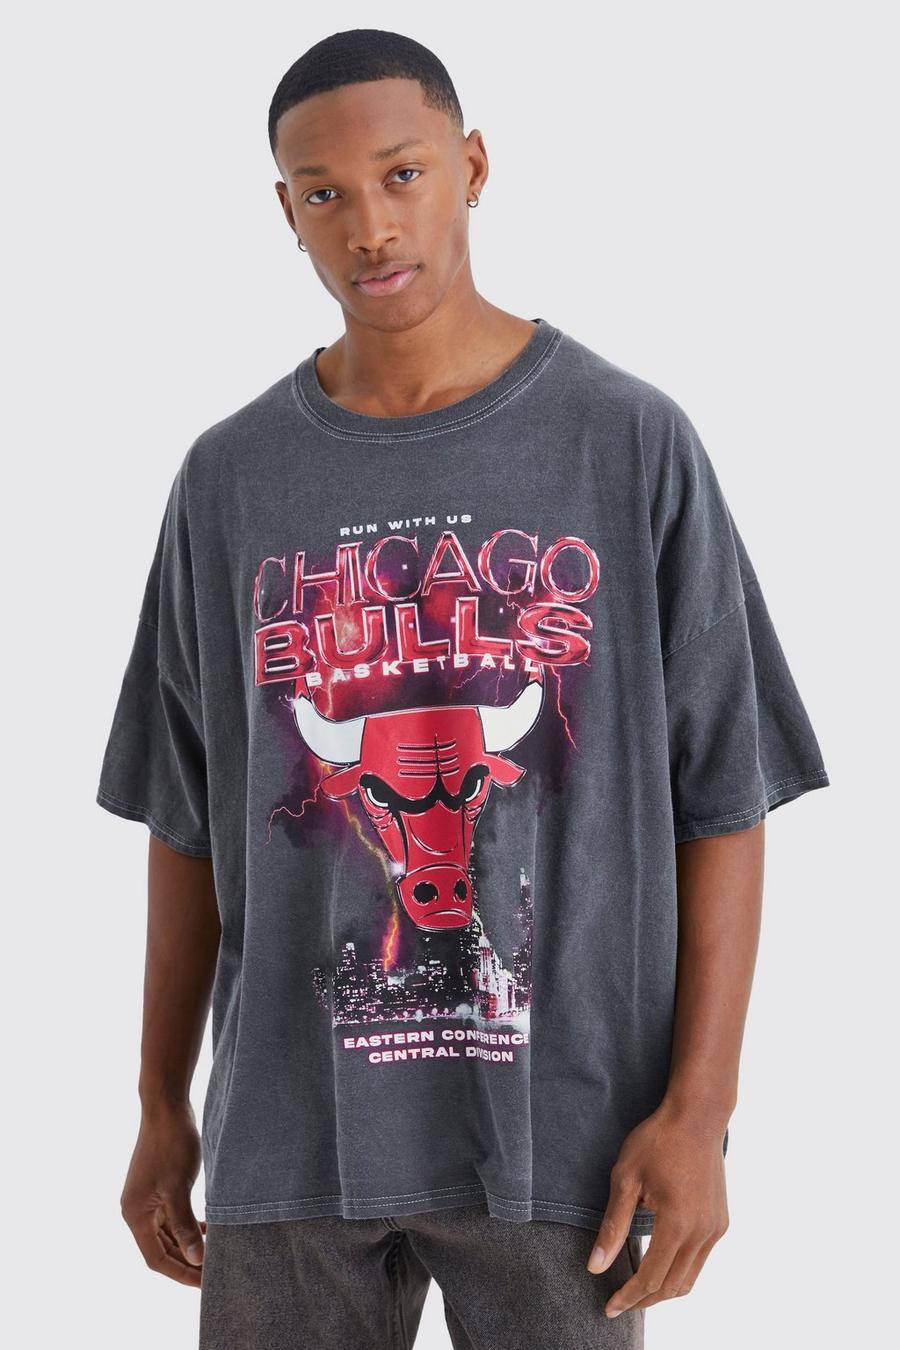 boohooMAN Chicago Bulls NBA Acid Wash License T Shirt - Grey - Size M